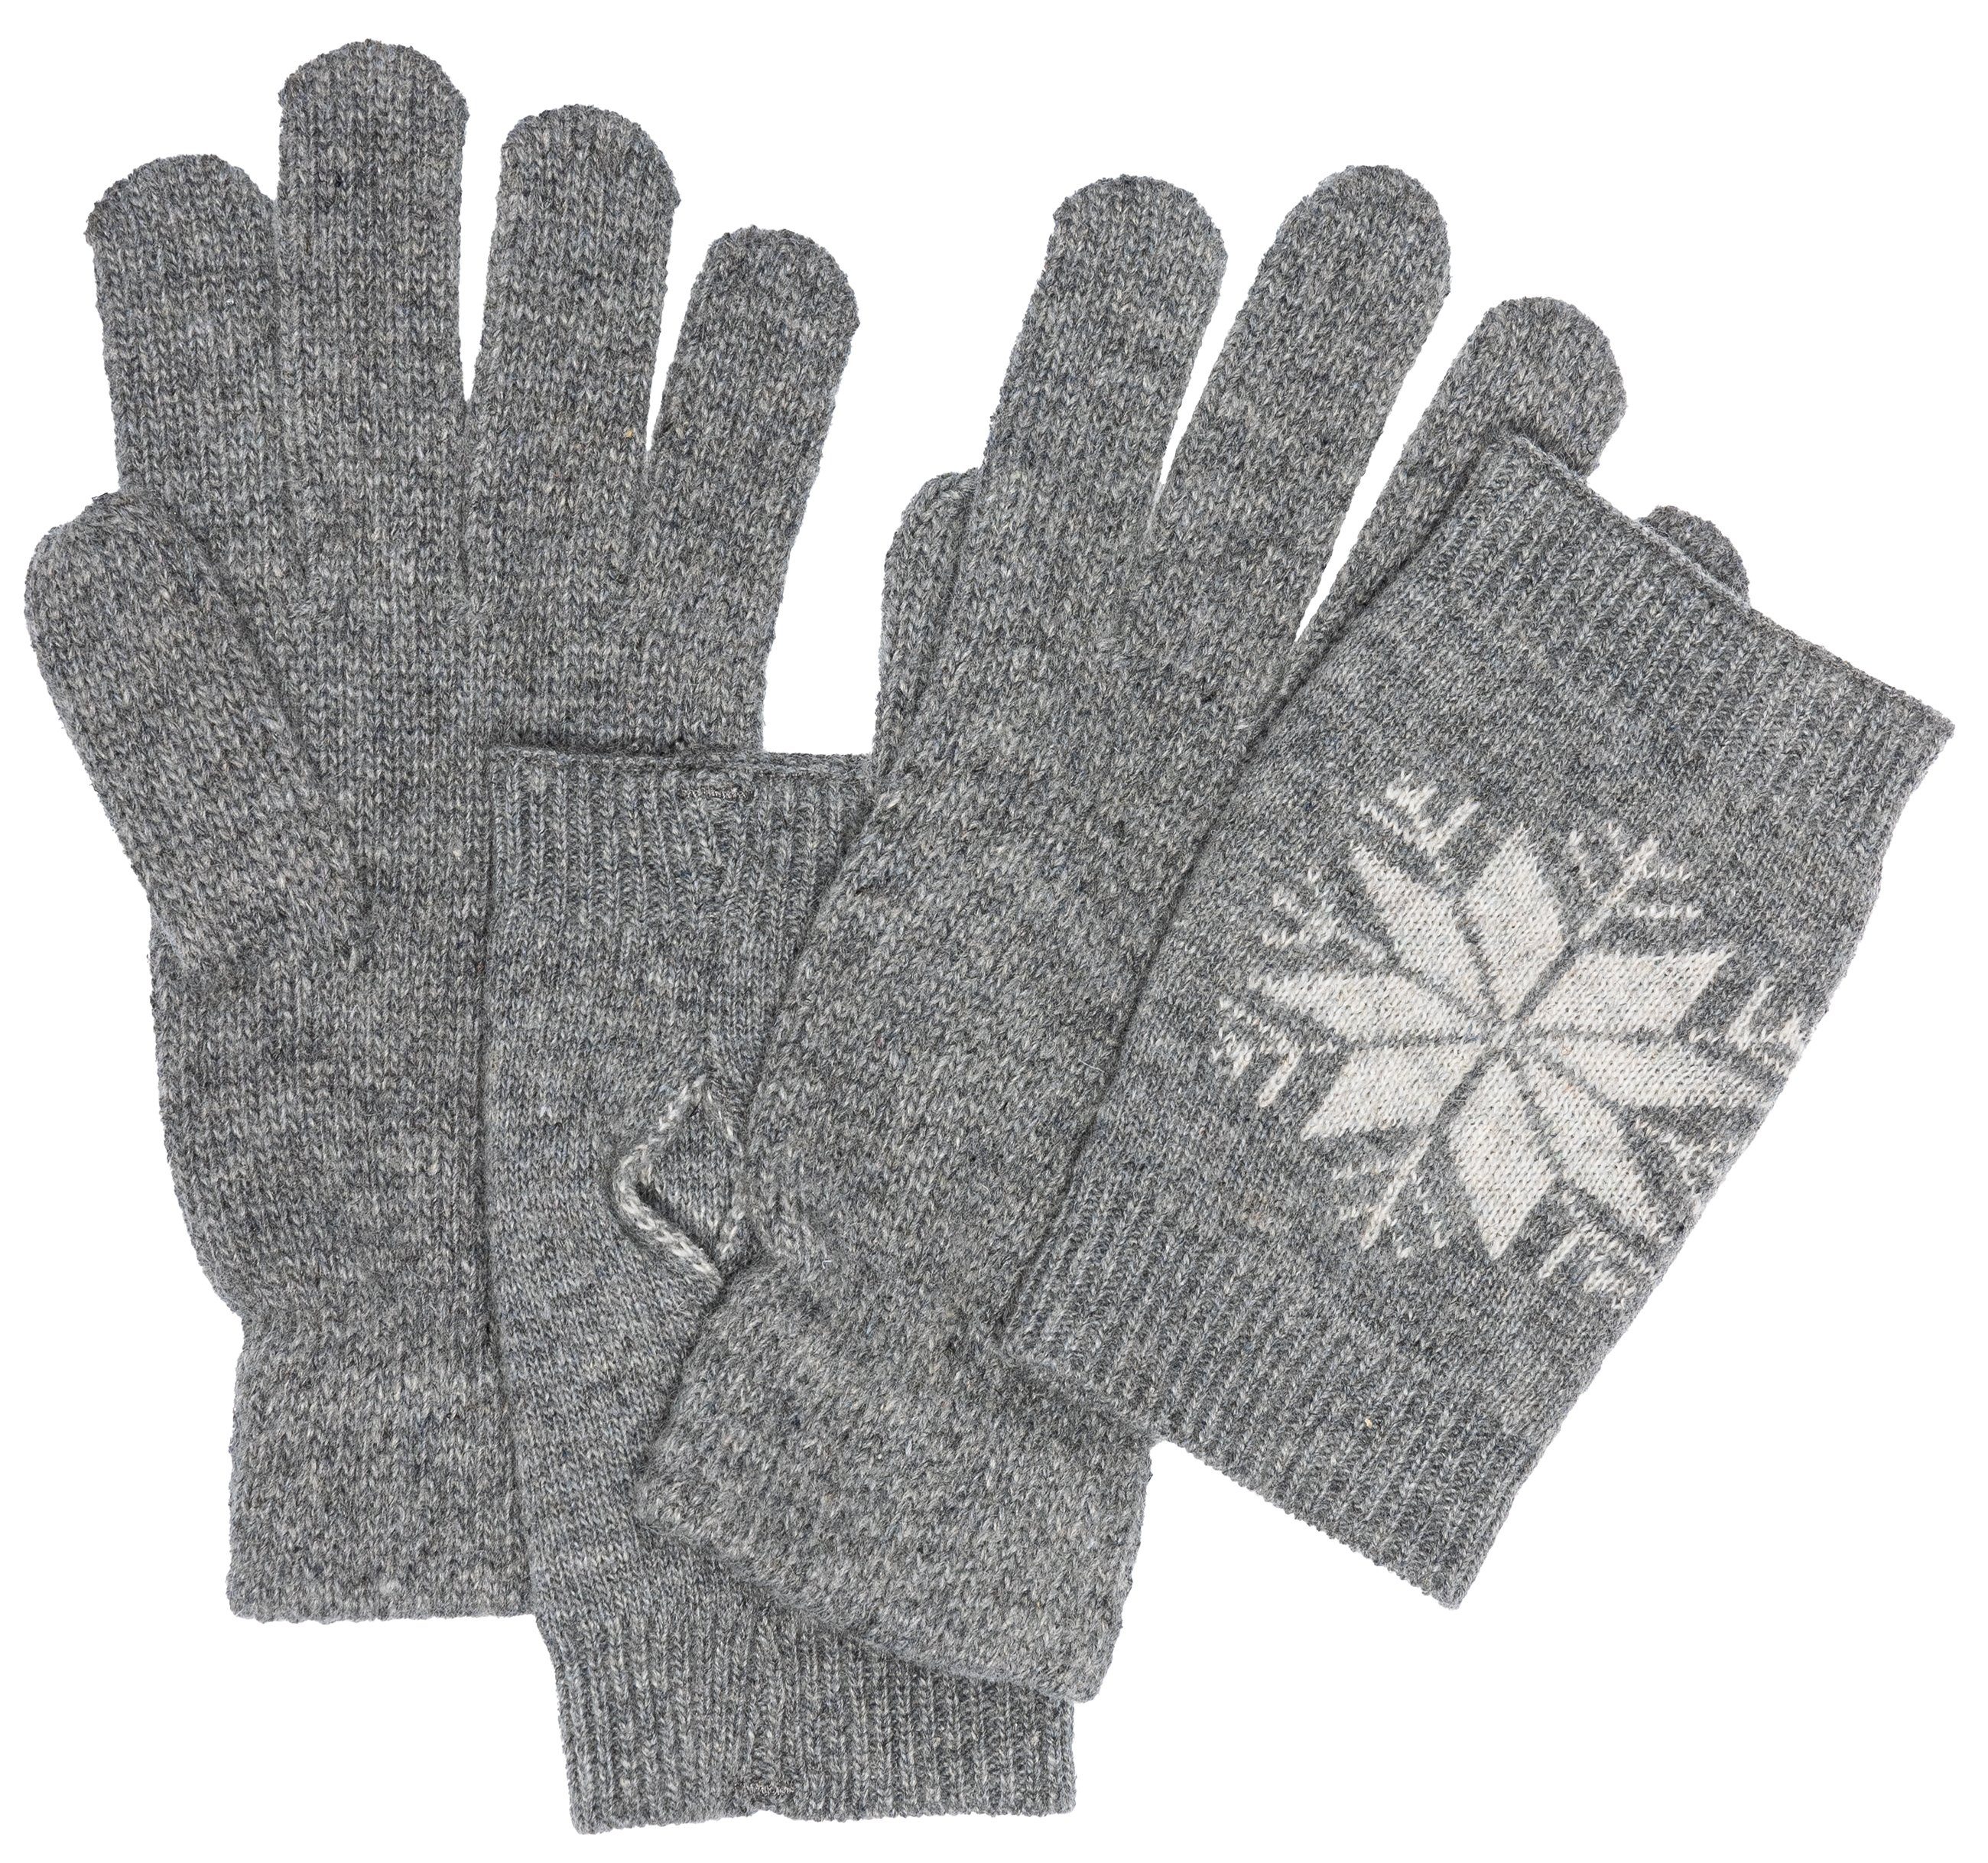 Handschuhe Damen Dekor mit Eiskristall GLV018 Strickhandschuhe Caspar Strick warme